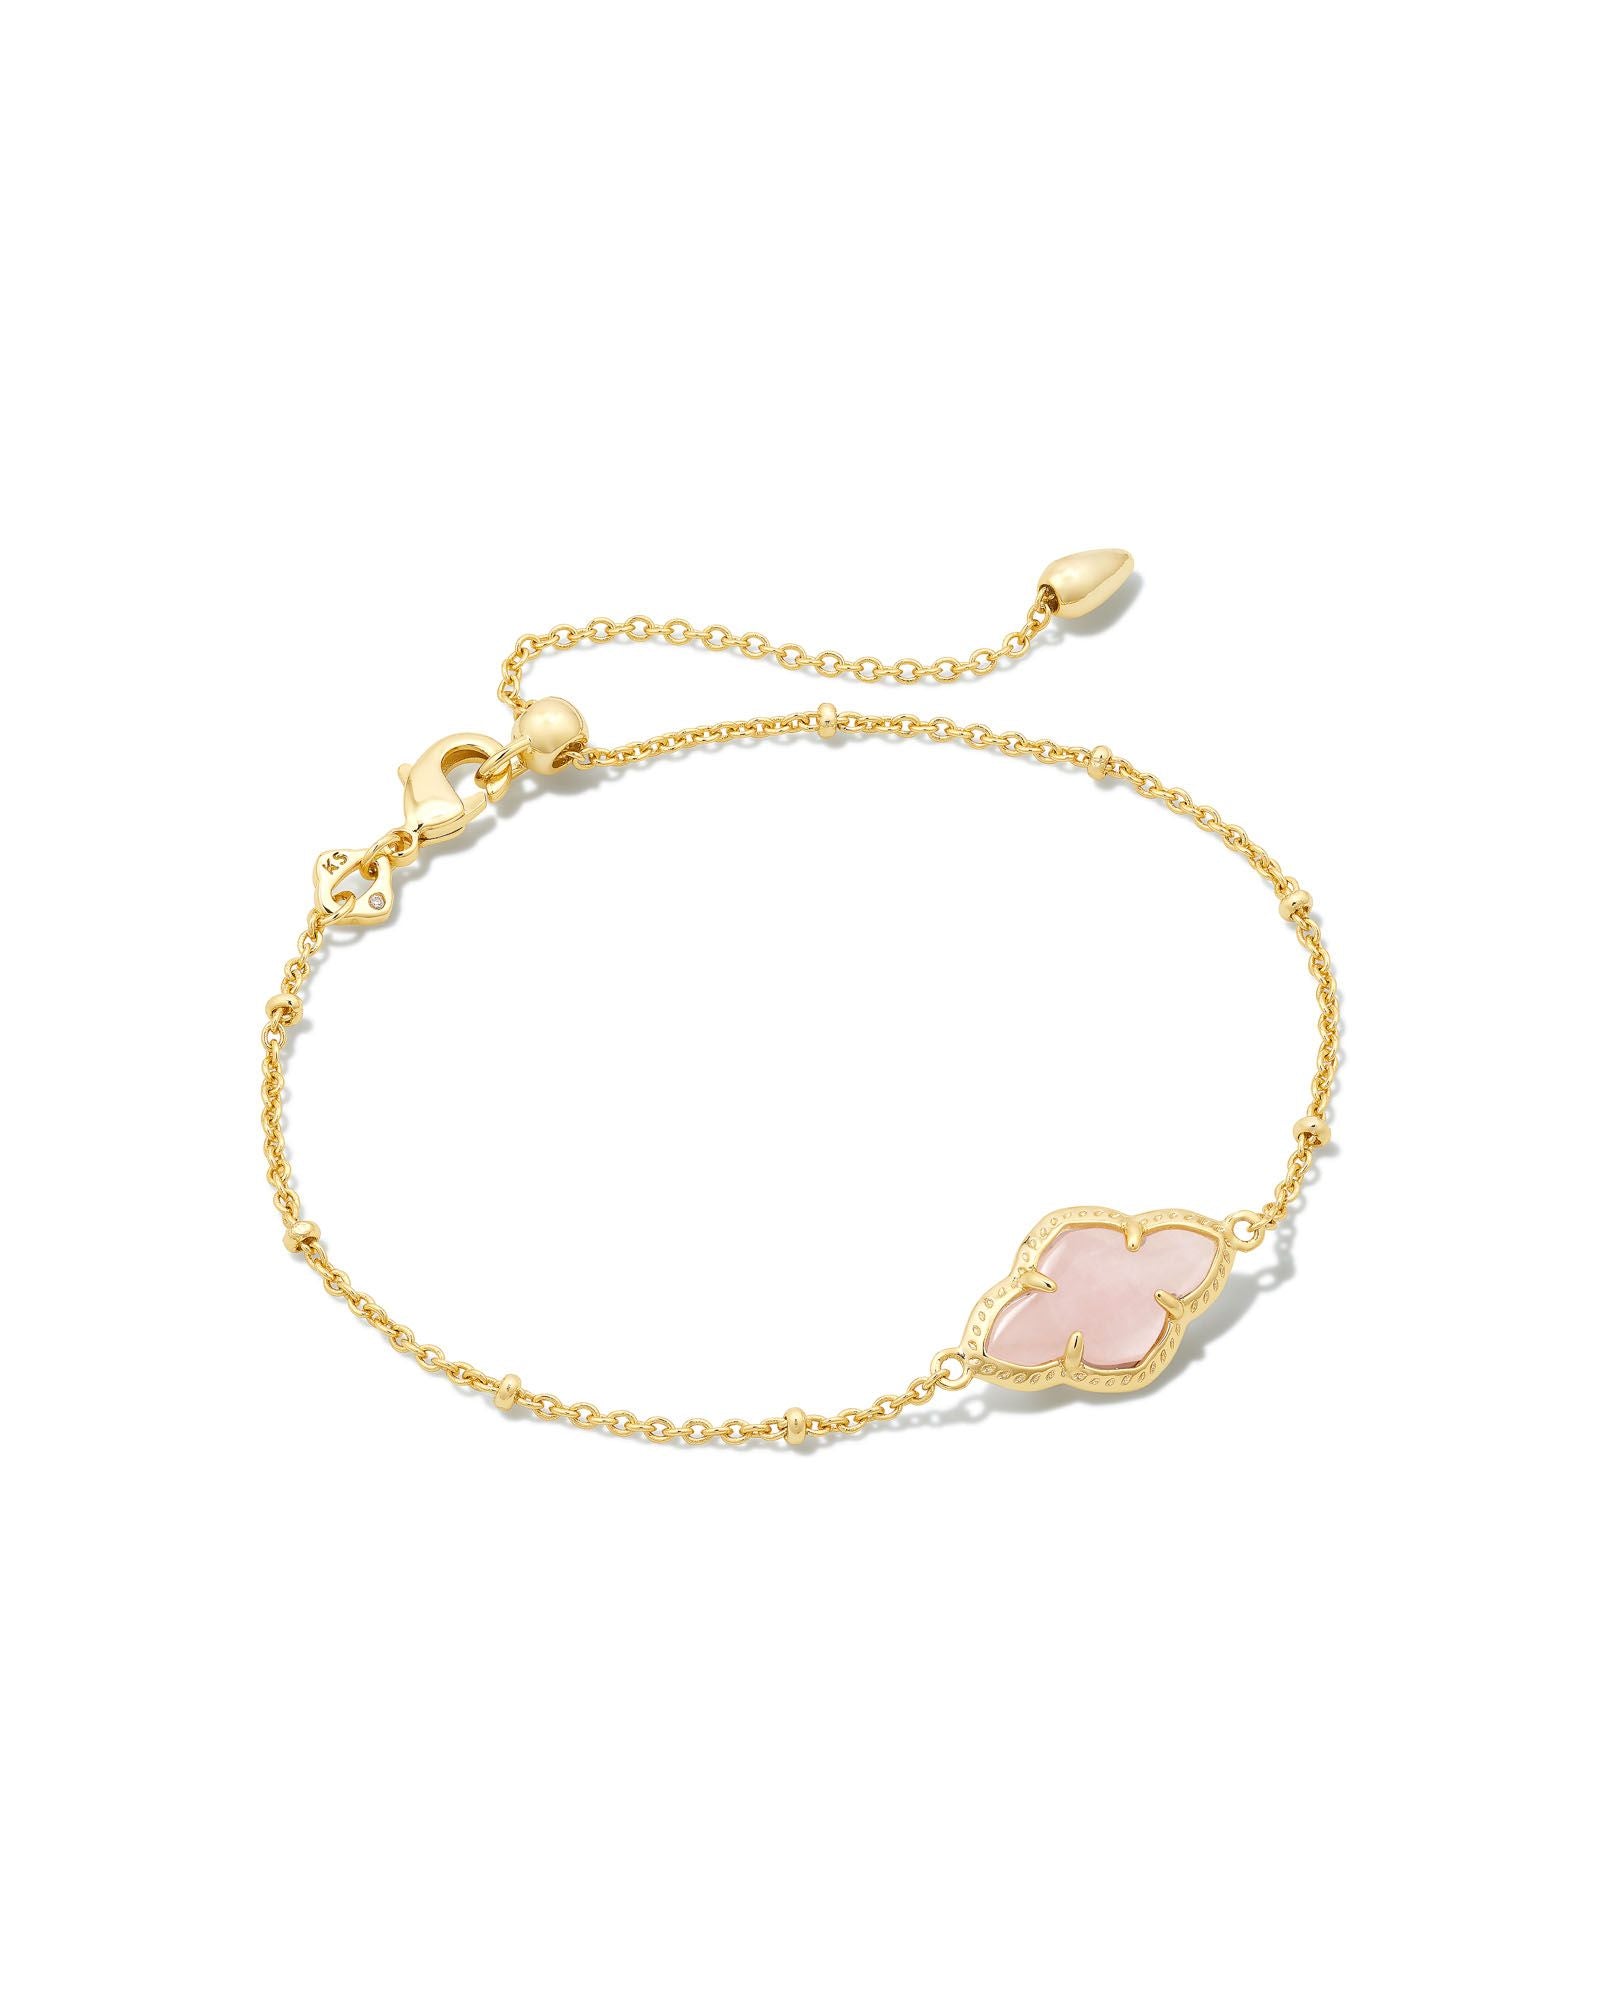 Abbie Satellite Chain Bracelet in Gold Rose Quartz